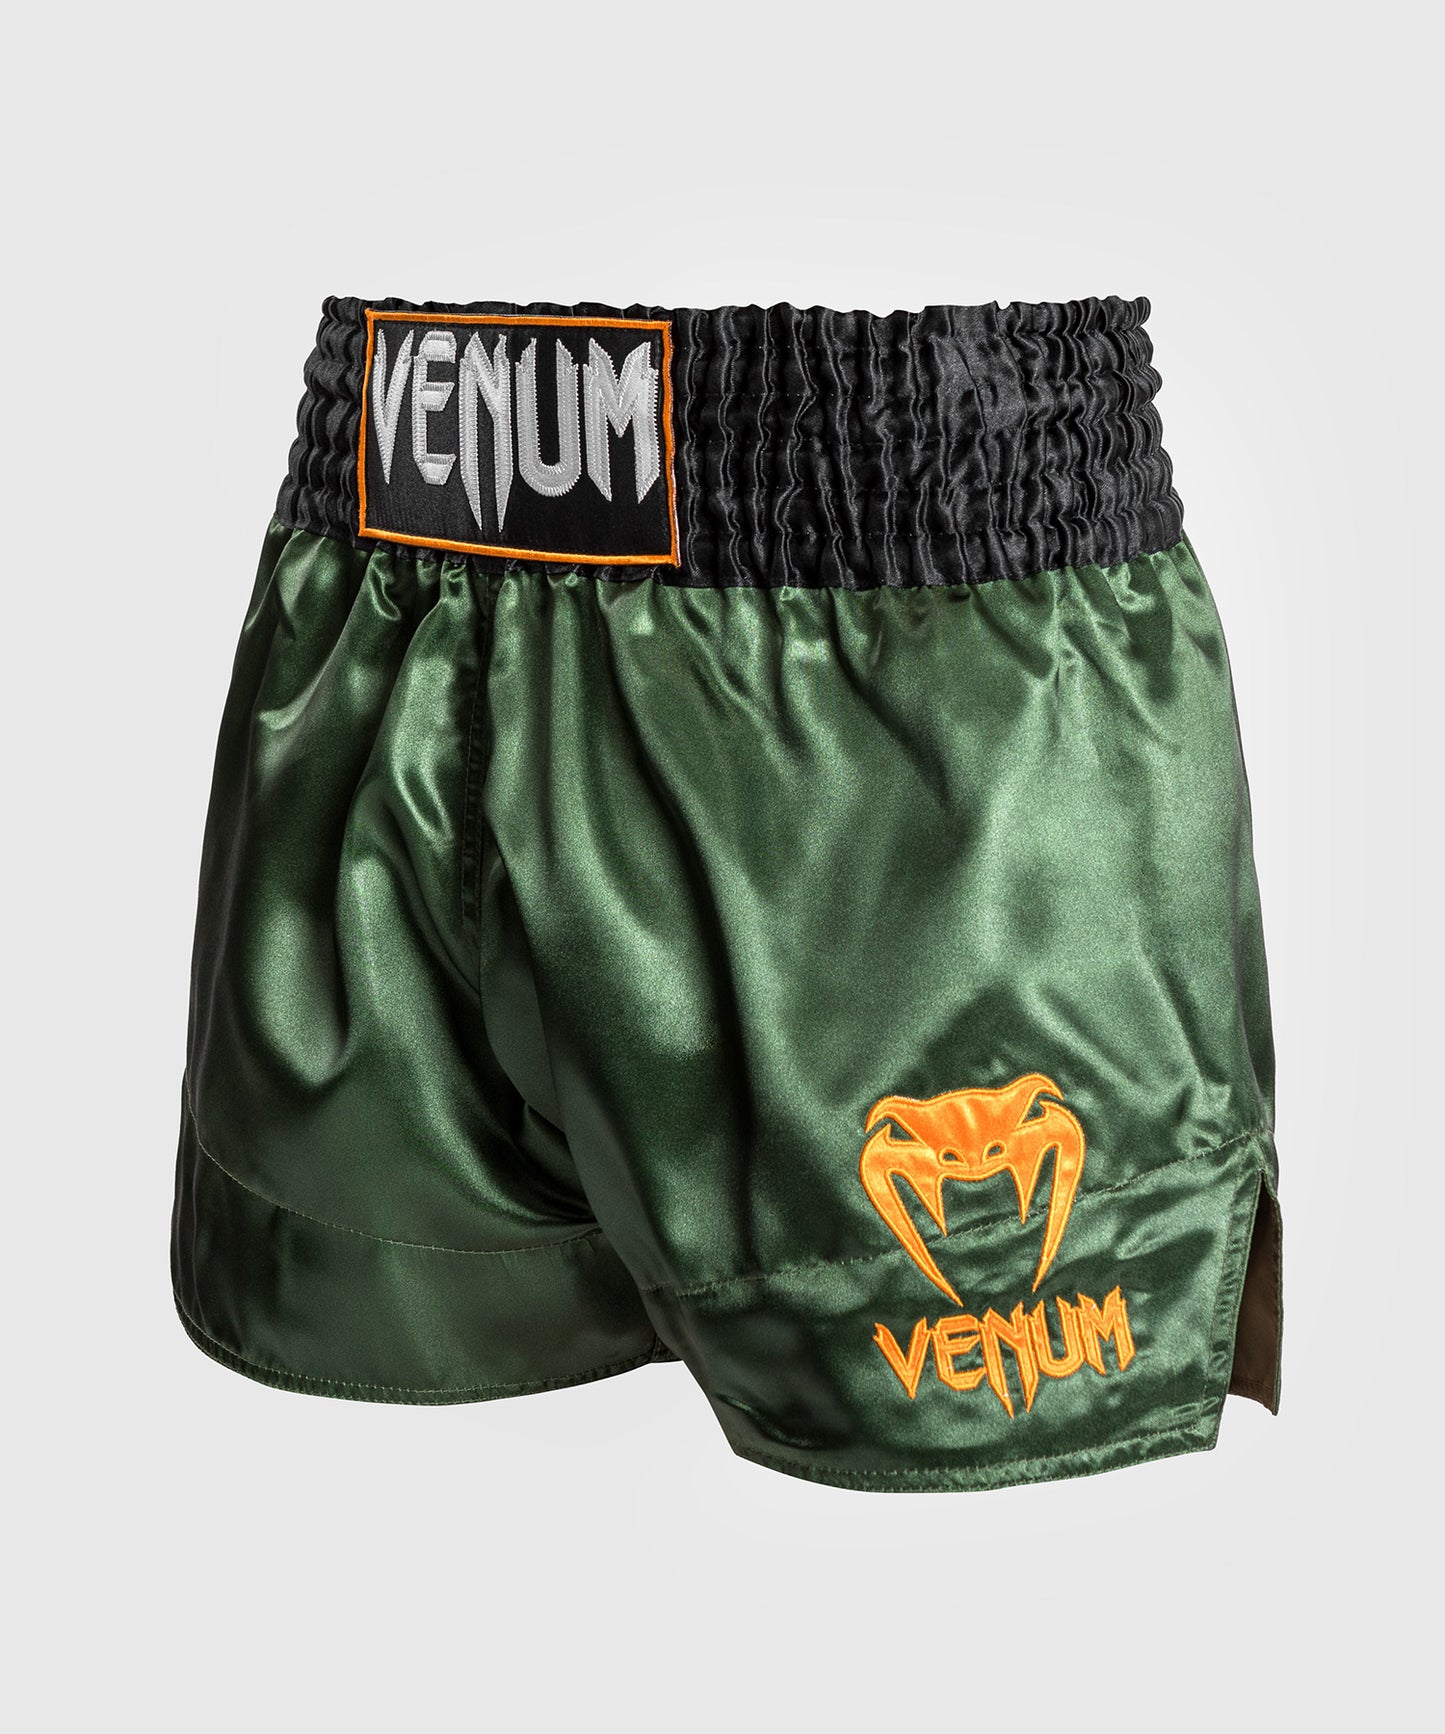 Venum Classic Muay Thaï Short - Green/Black/Gold